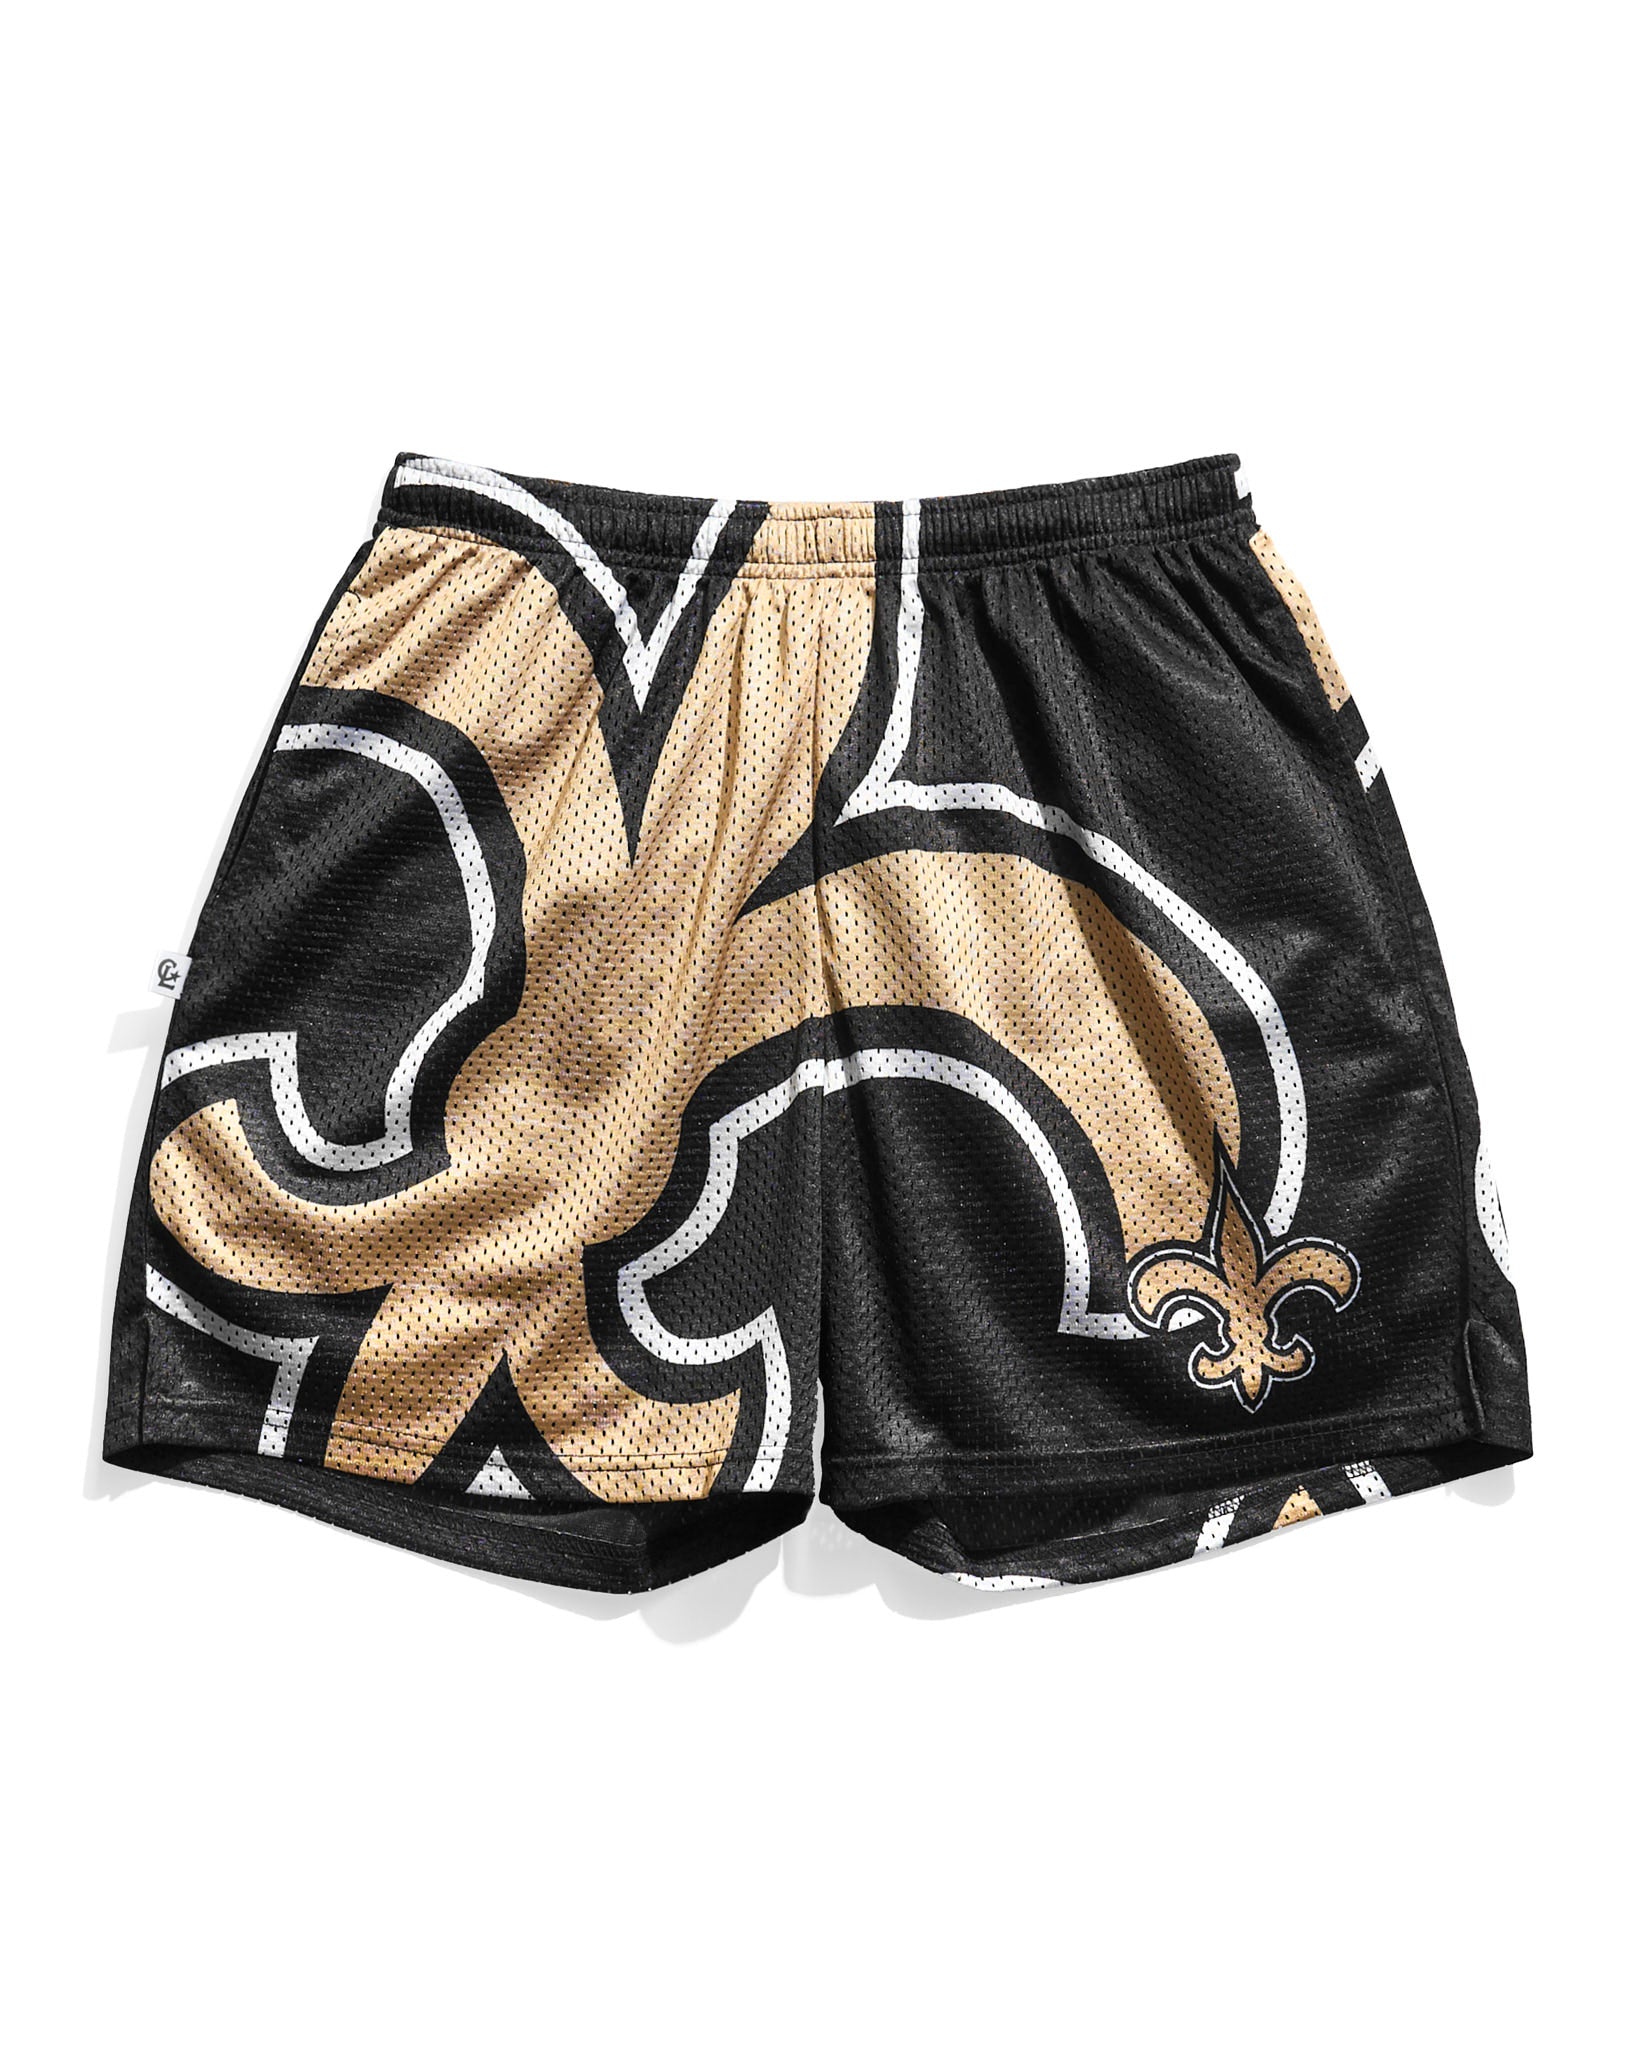 New Orleans Saints Big Logo Retro Shorts